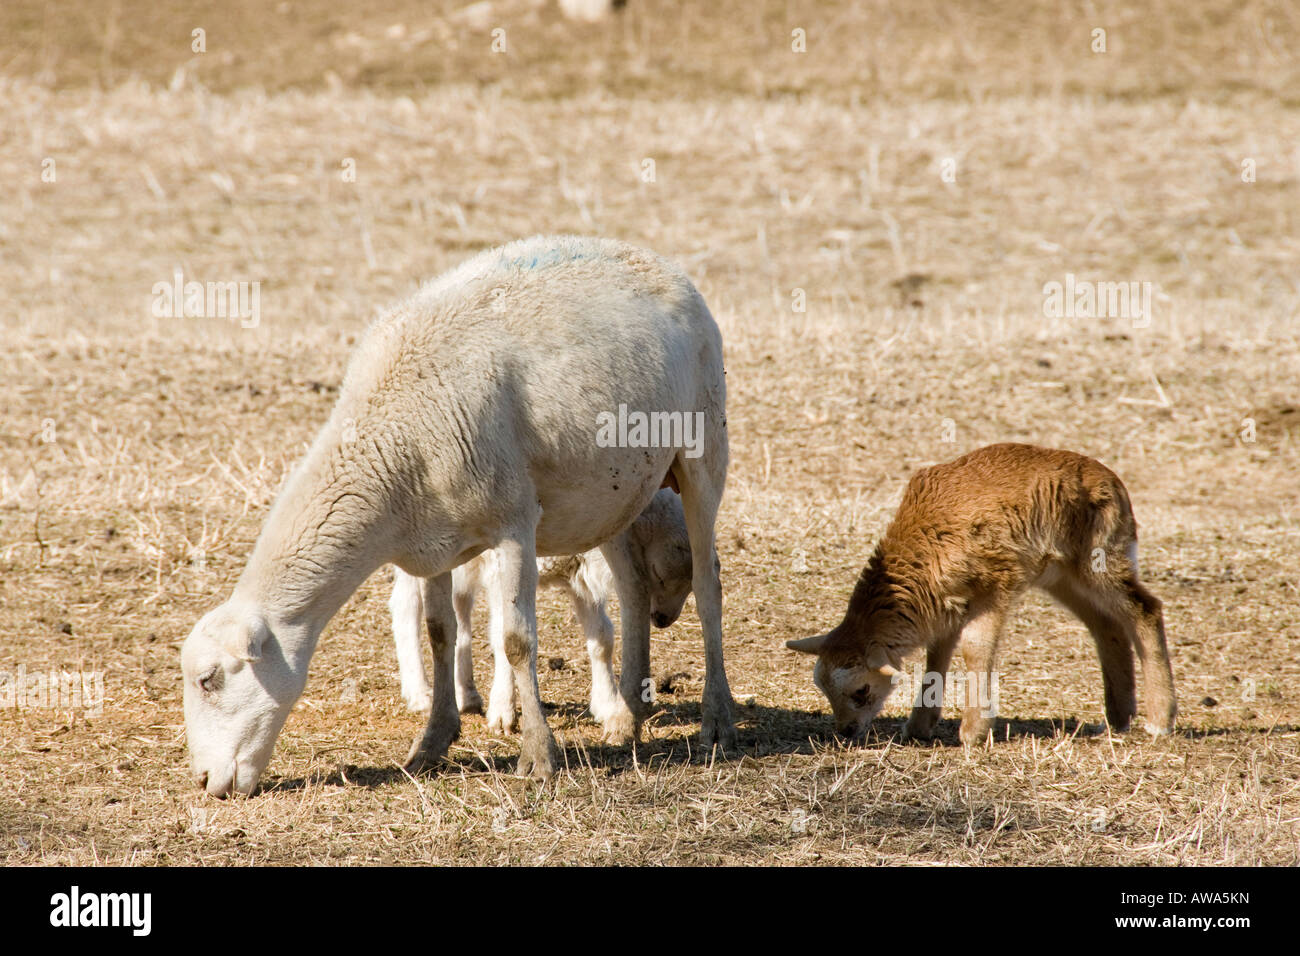 An ewe with twin spring lambs. Kansas, USA. Stock Photo